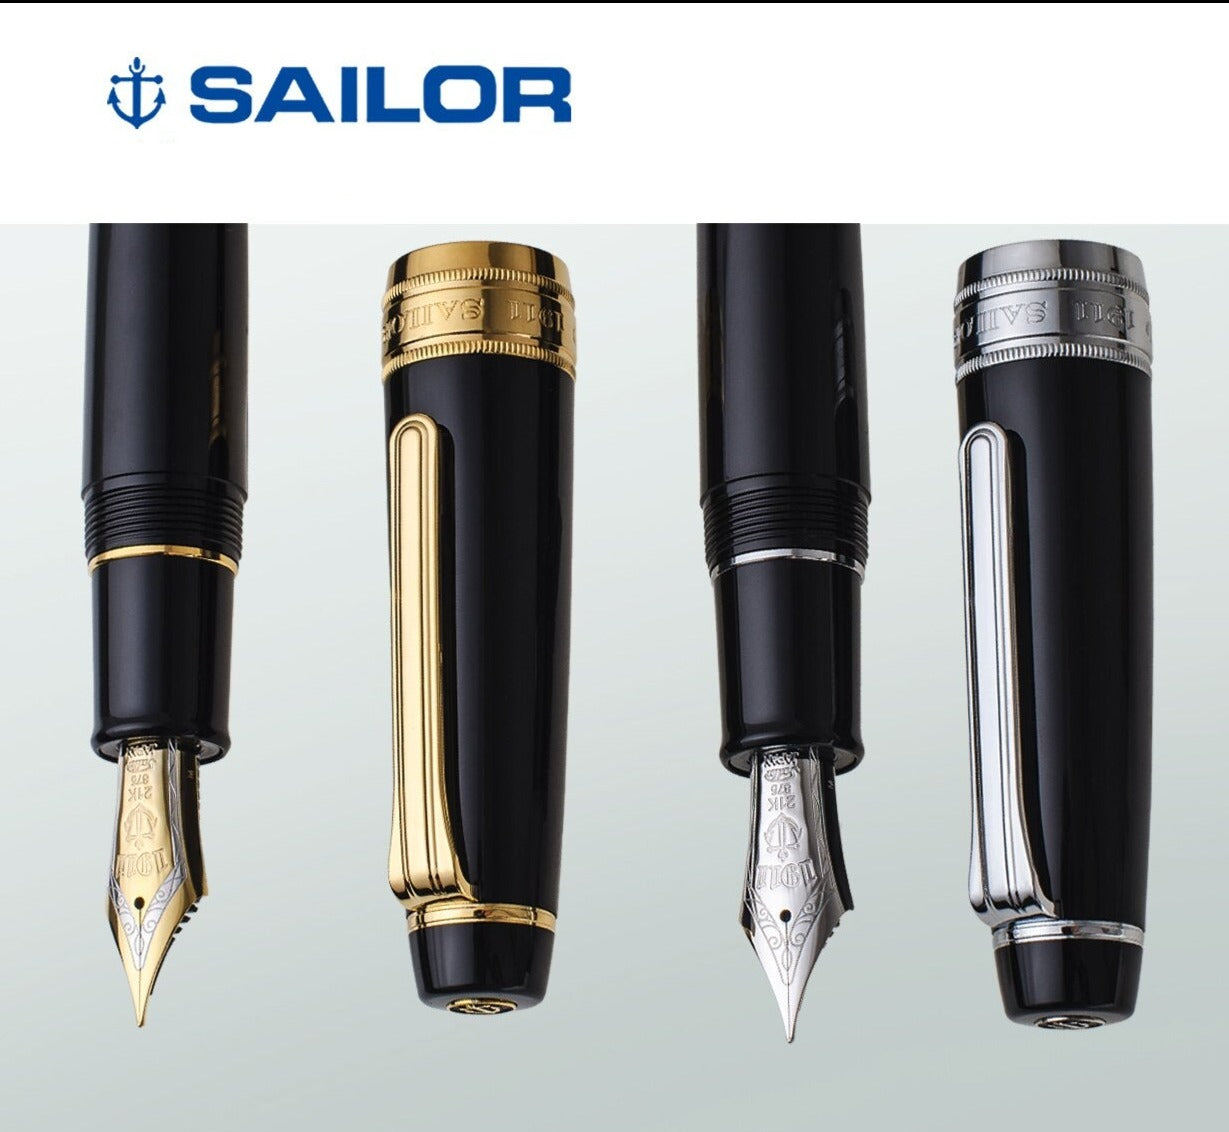 stylo plume sailor